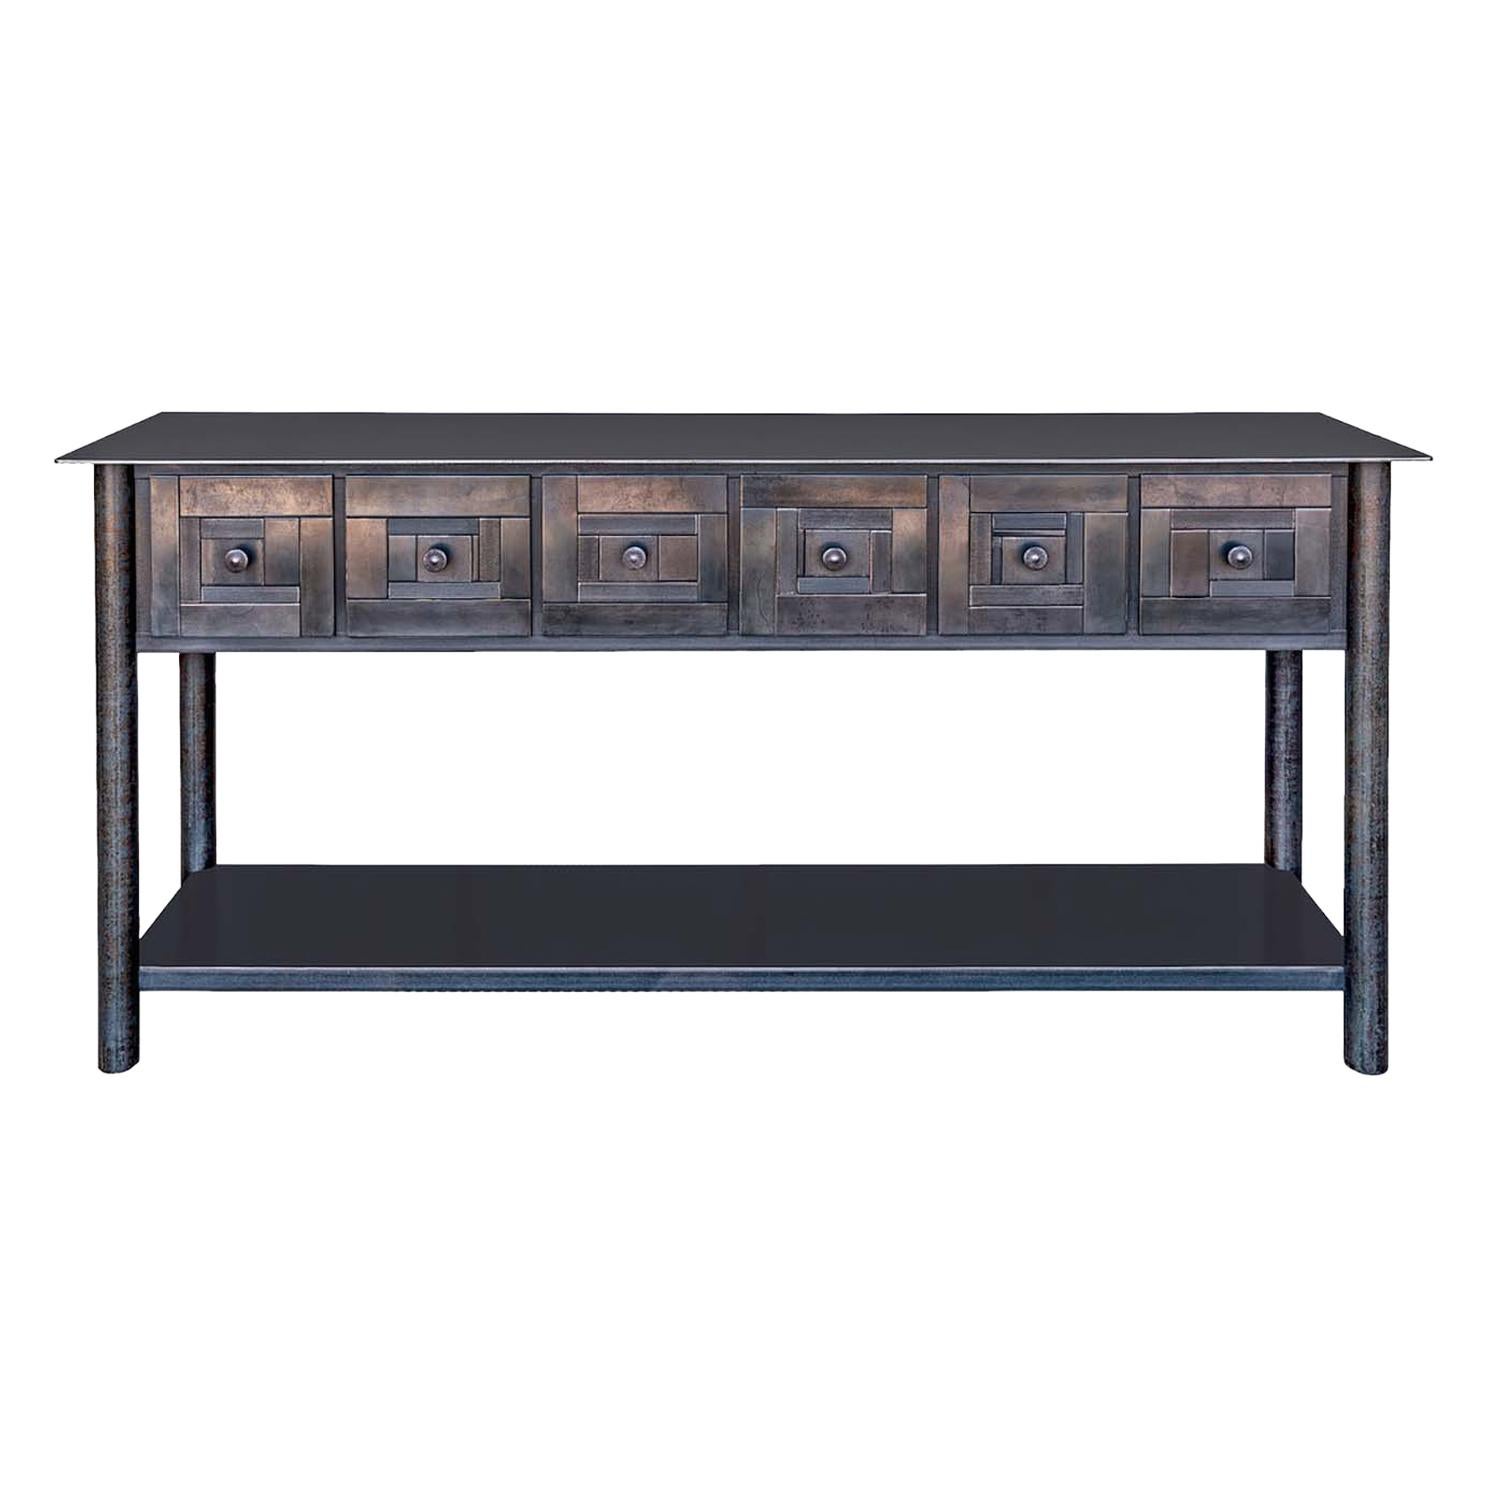 Jim Rose Steel Furniture - Steel Console Table with Shelf, Monochromatic Design